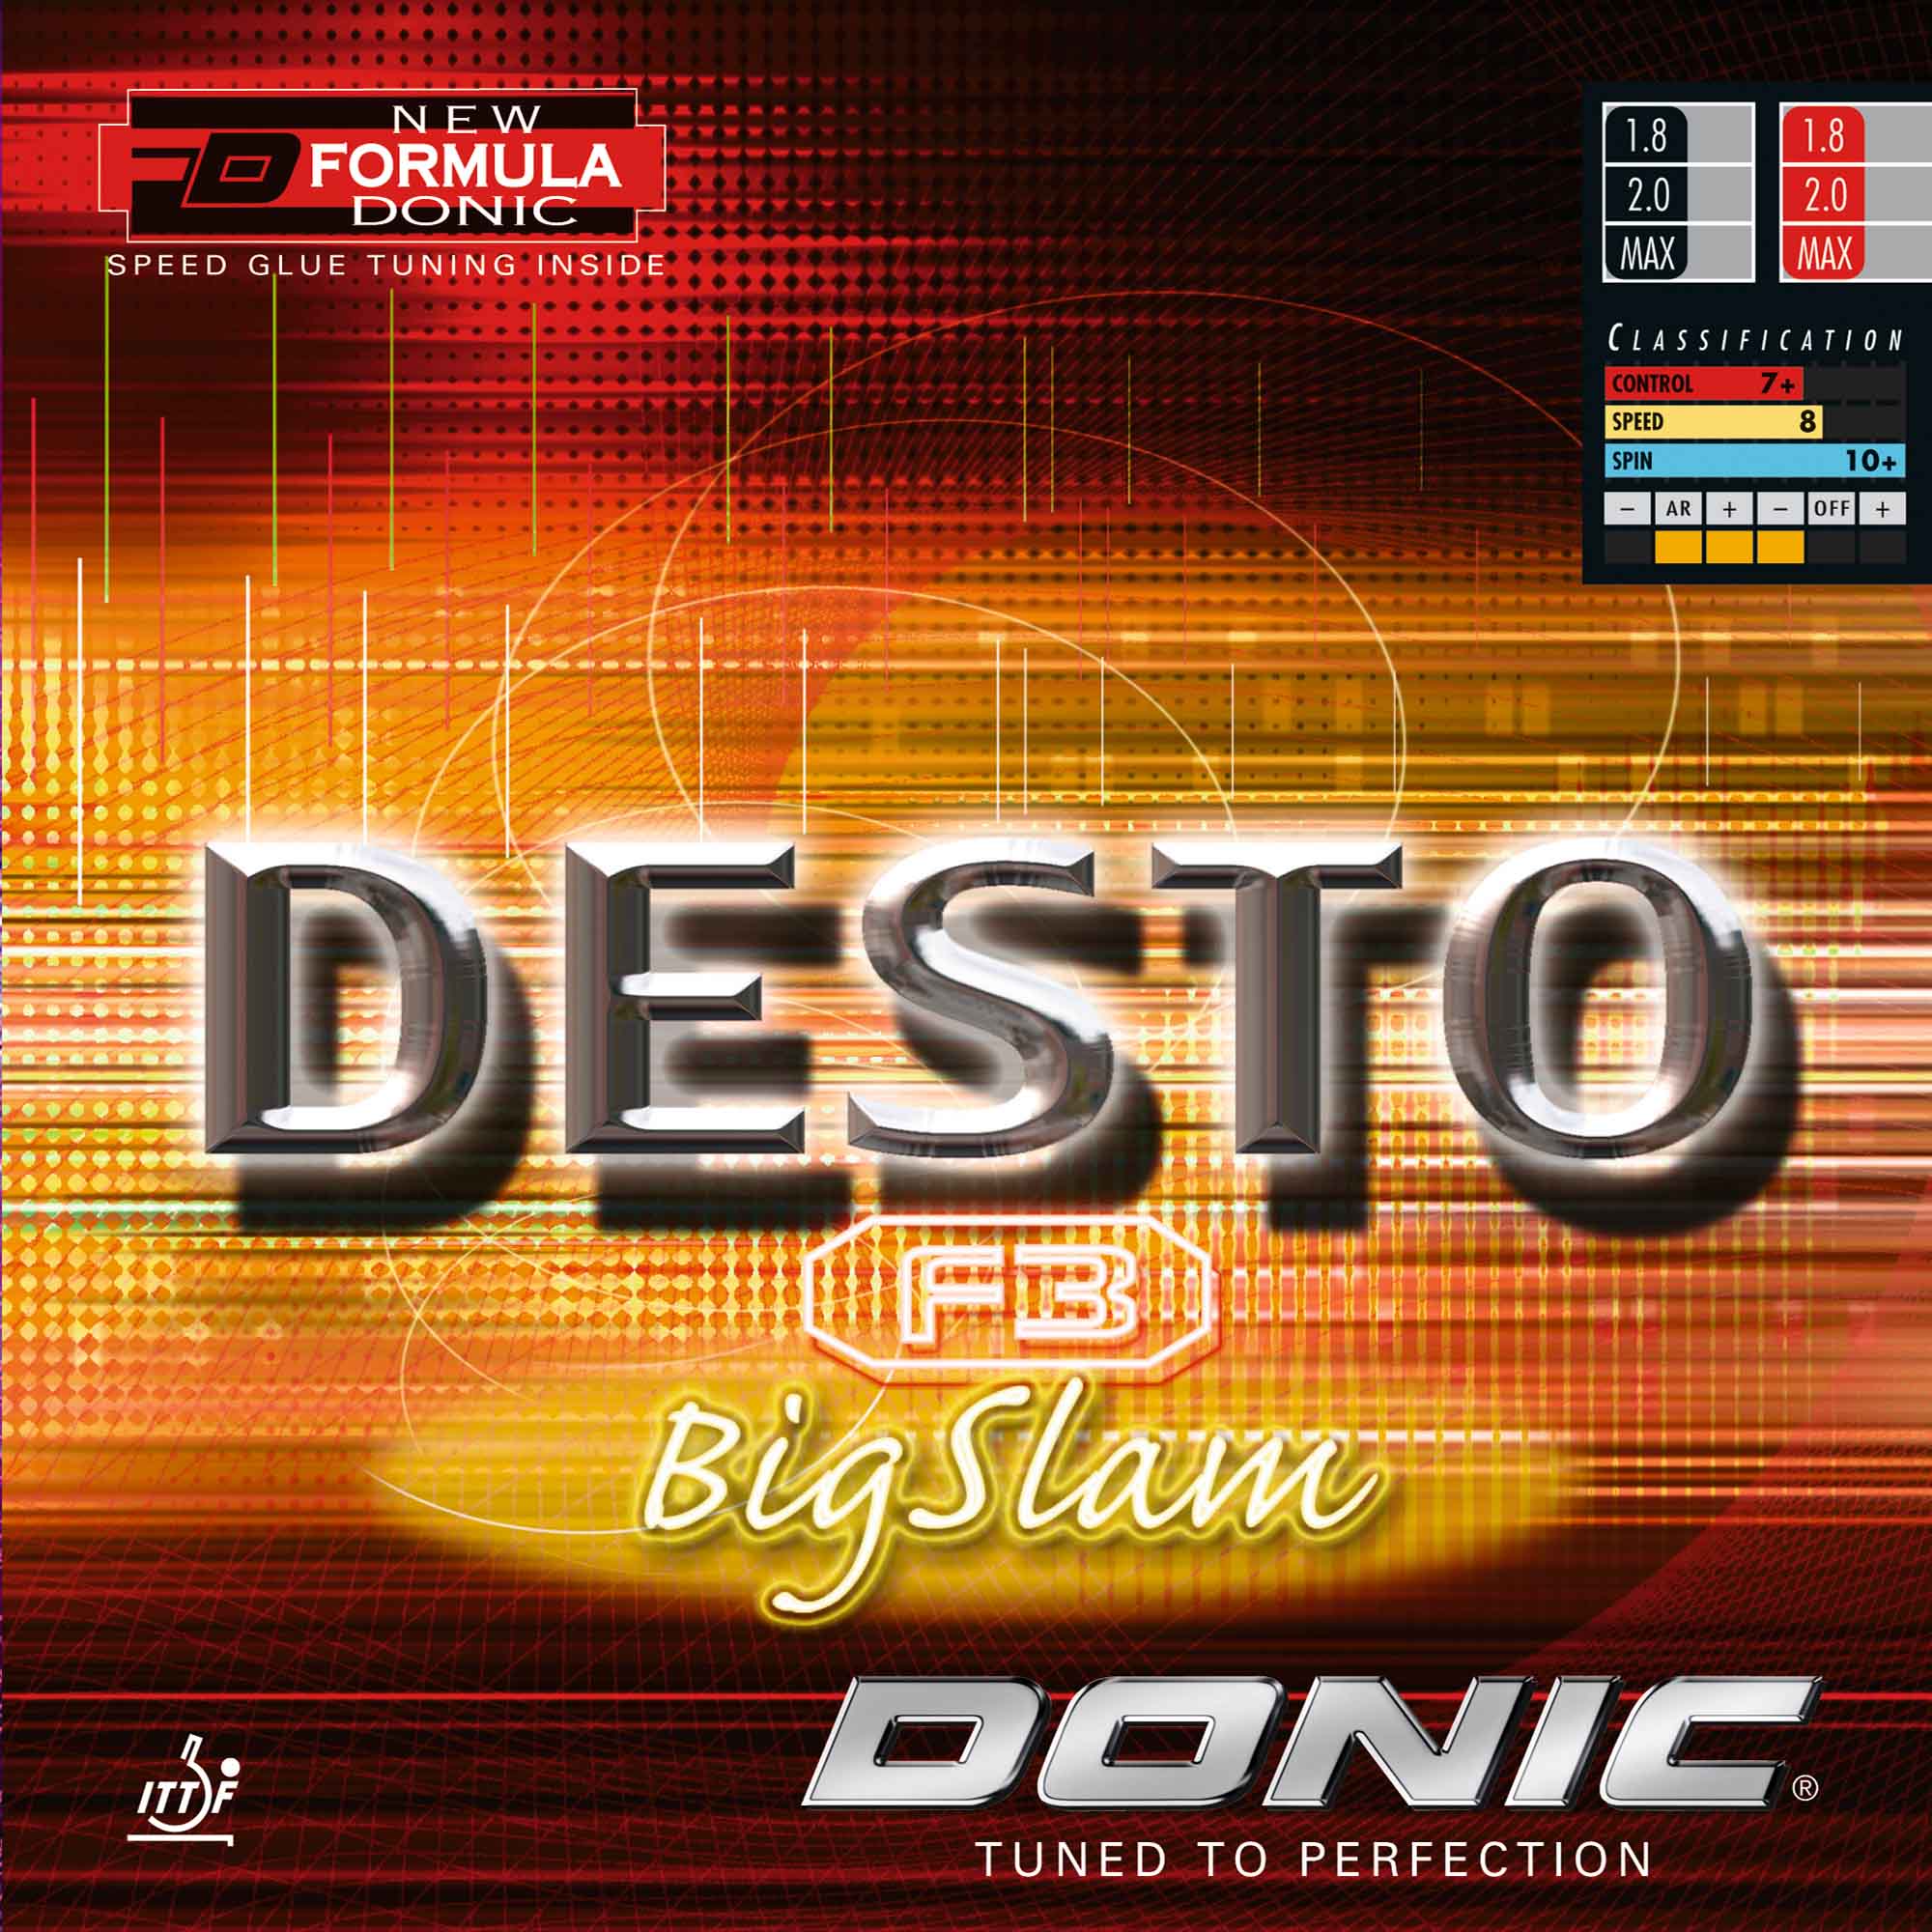 Donic Belag Desto F3 BigSlam